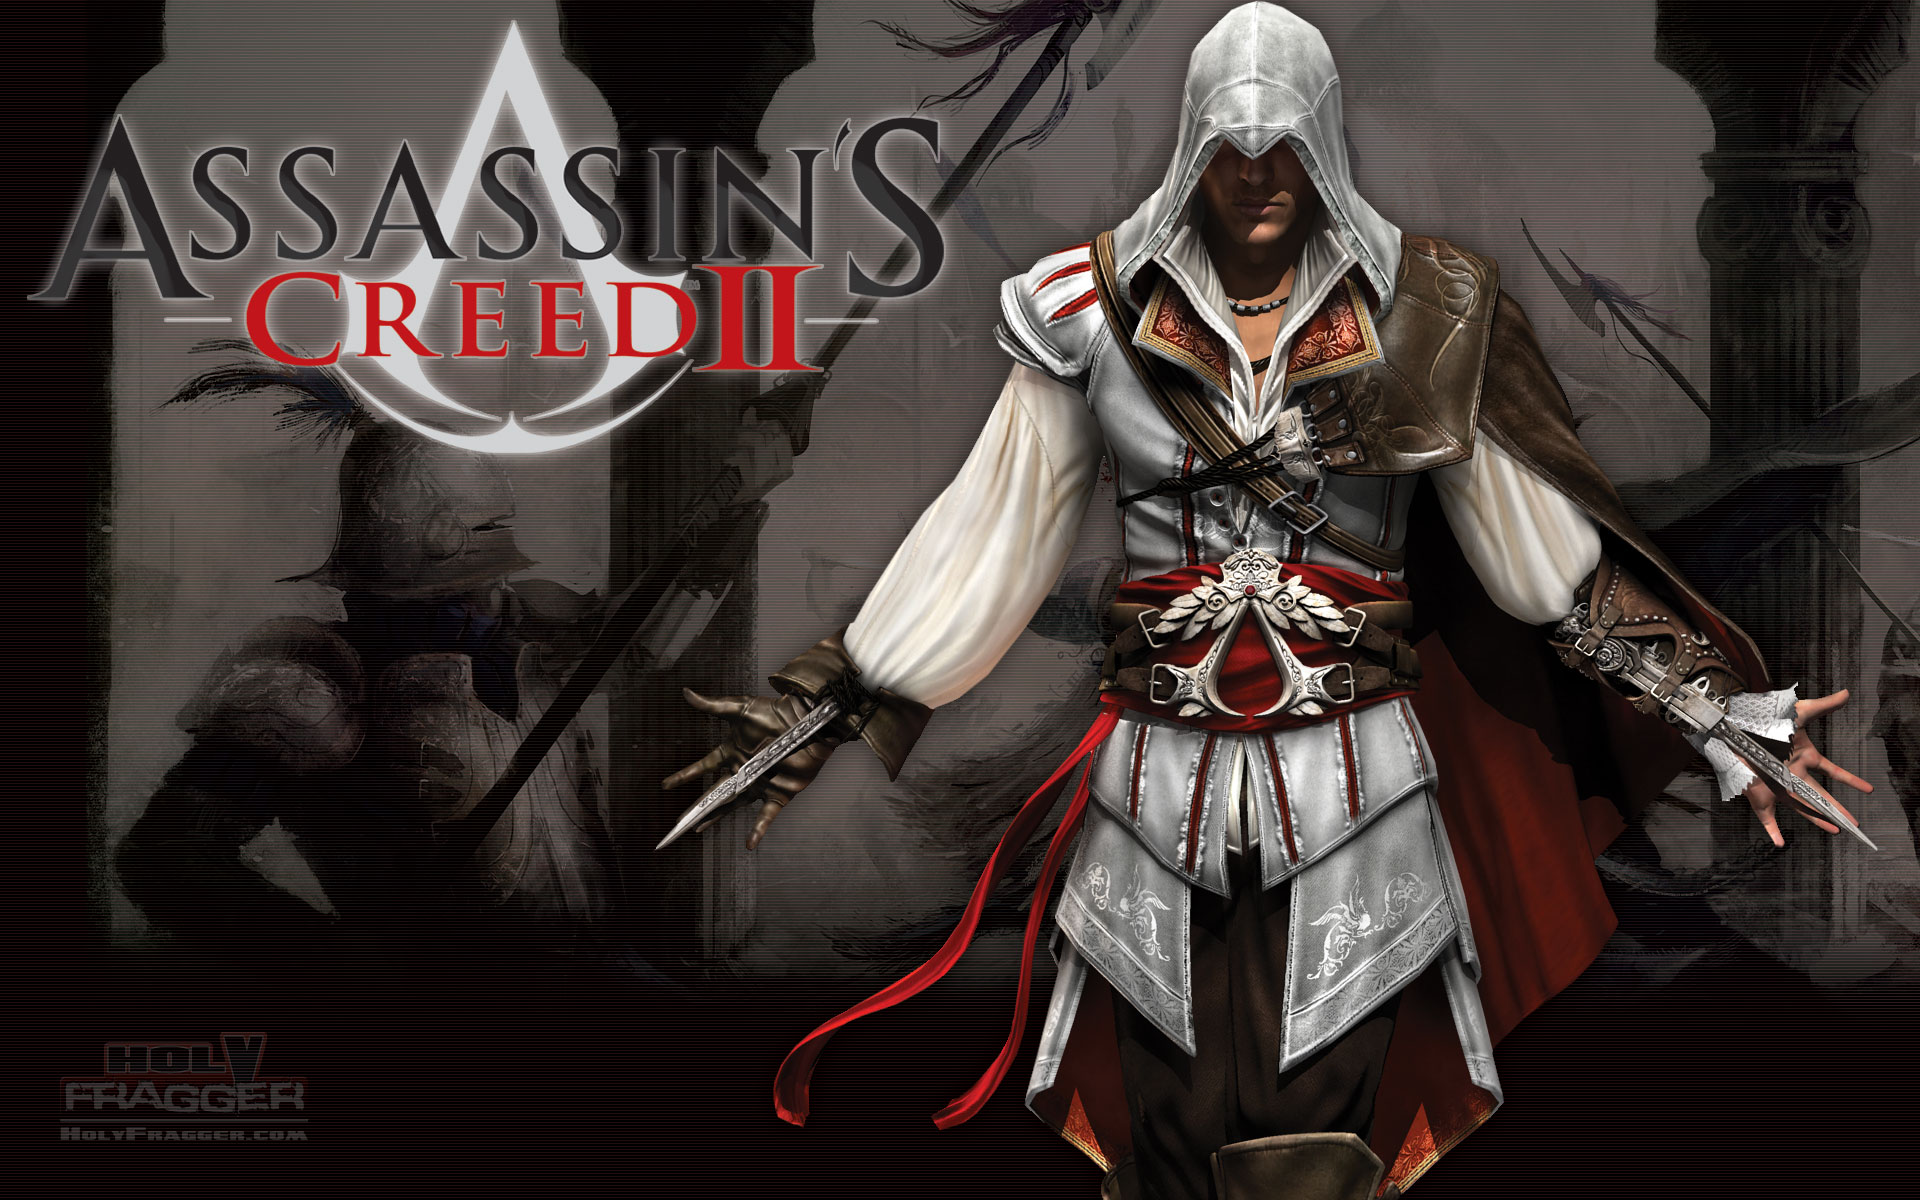 Descarga gratuita de fondo de pantalla para móvil de Assassin's Creed Ii, Juego, Assassin's Creed, Videojuego.